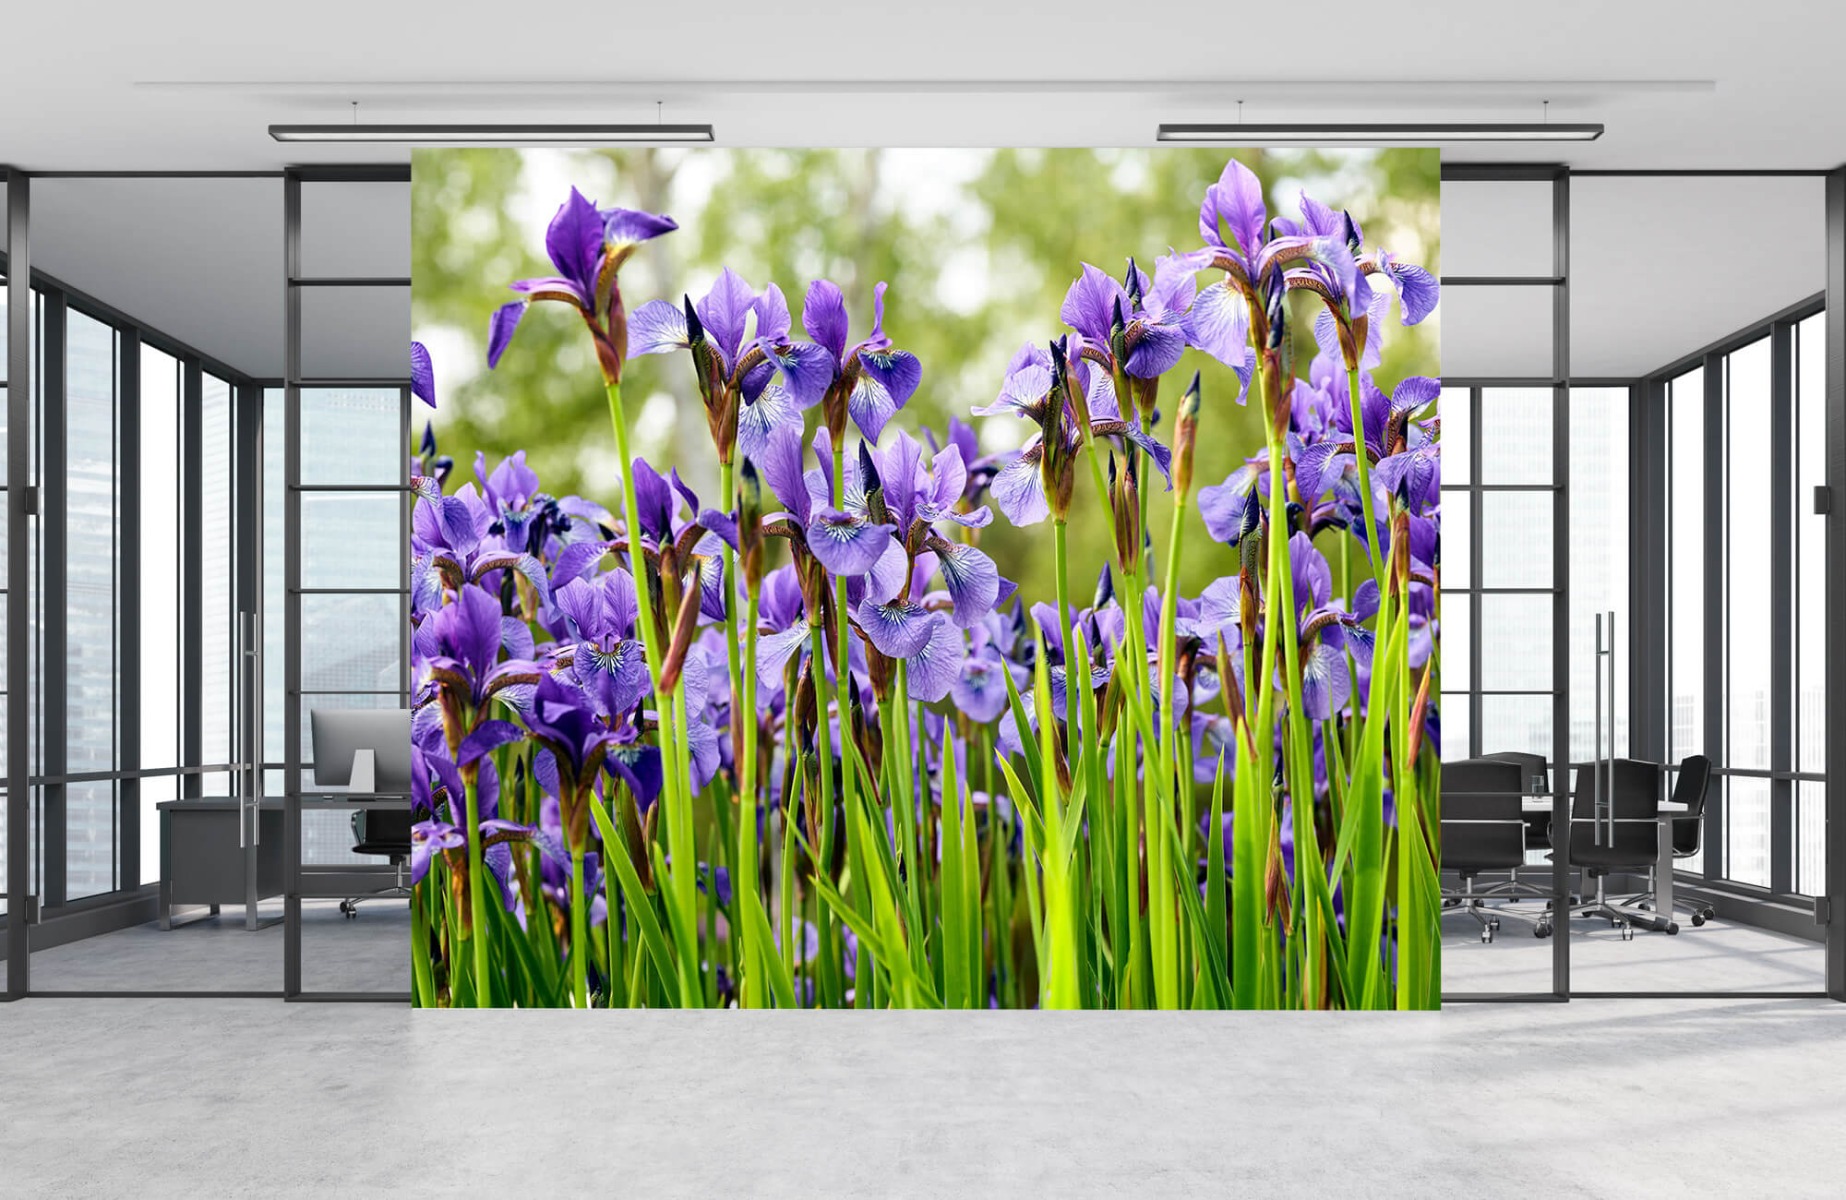 Flower fields - Irises  - Bedroom 9